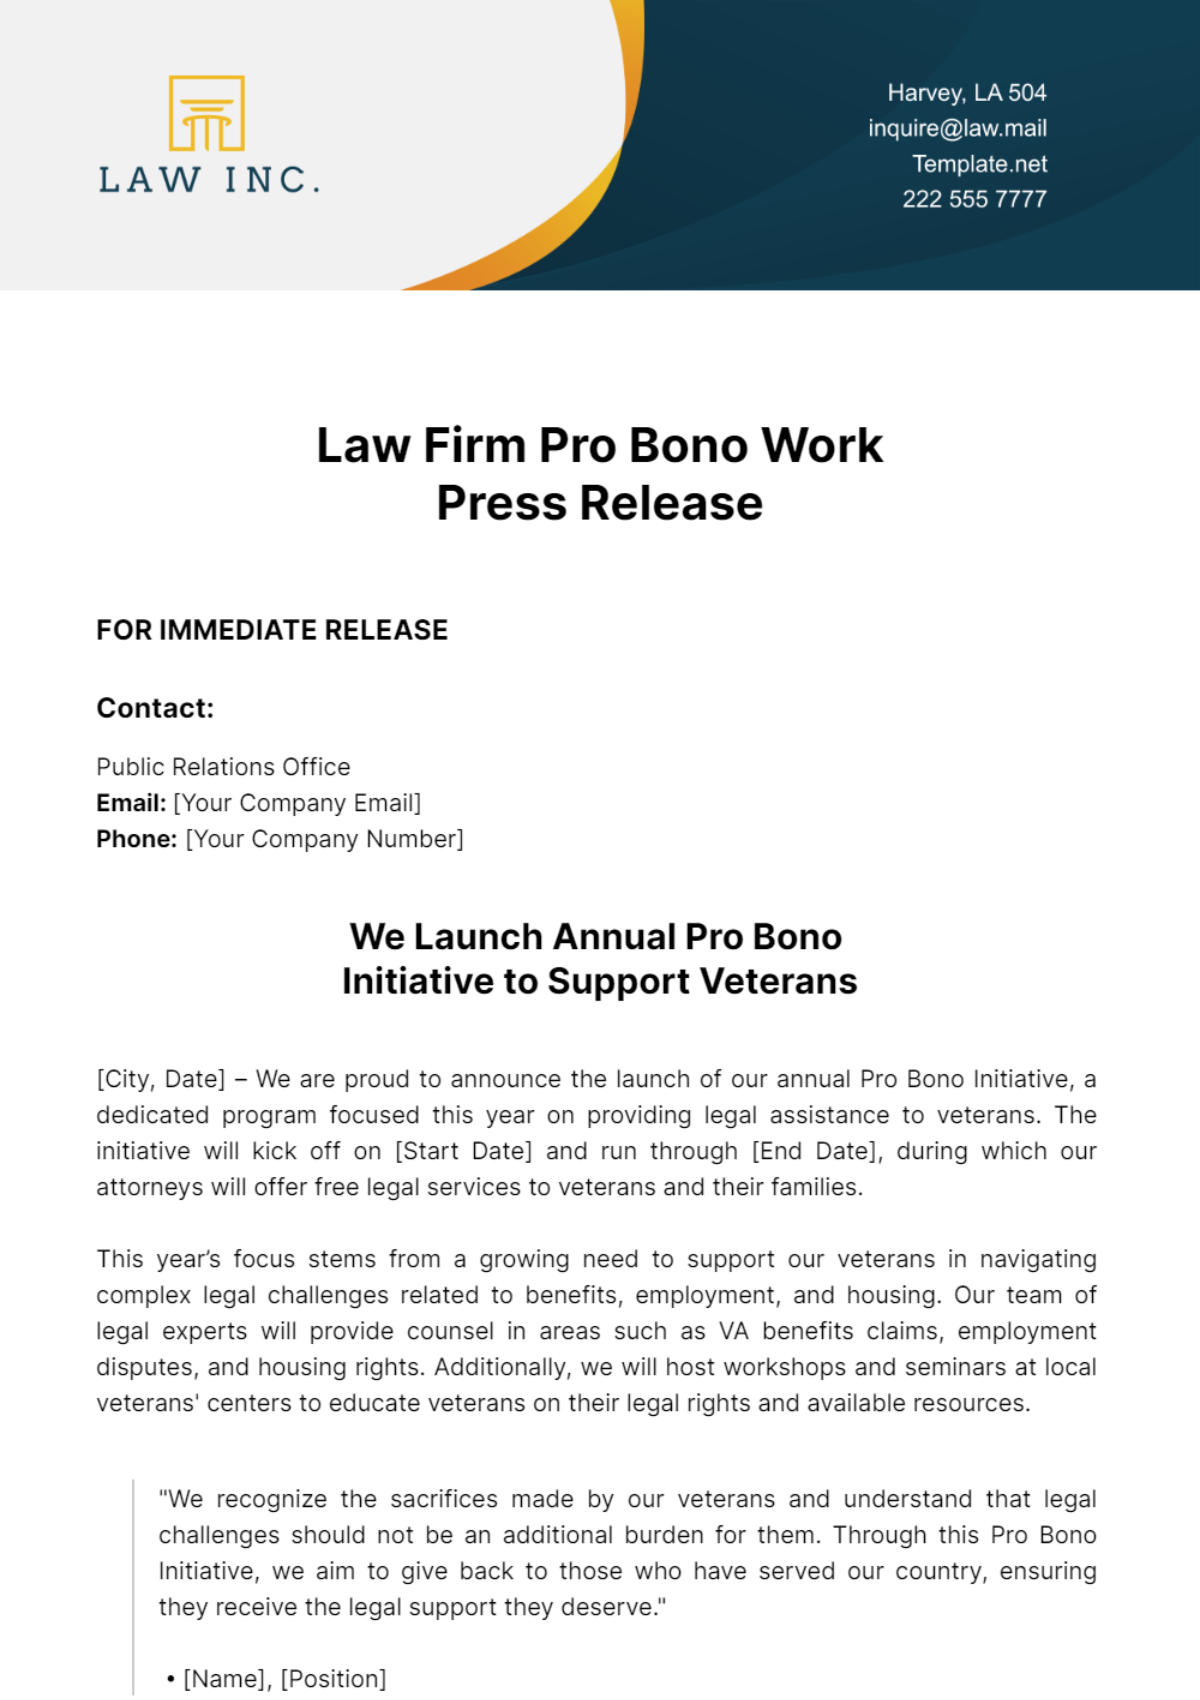 Free Law Firm Pro Bono Work Press Release Template